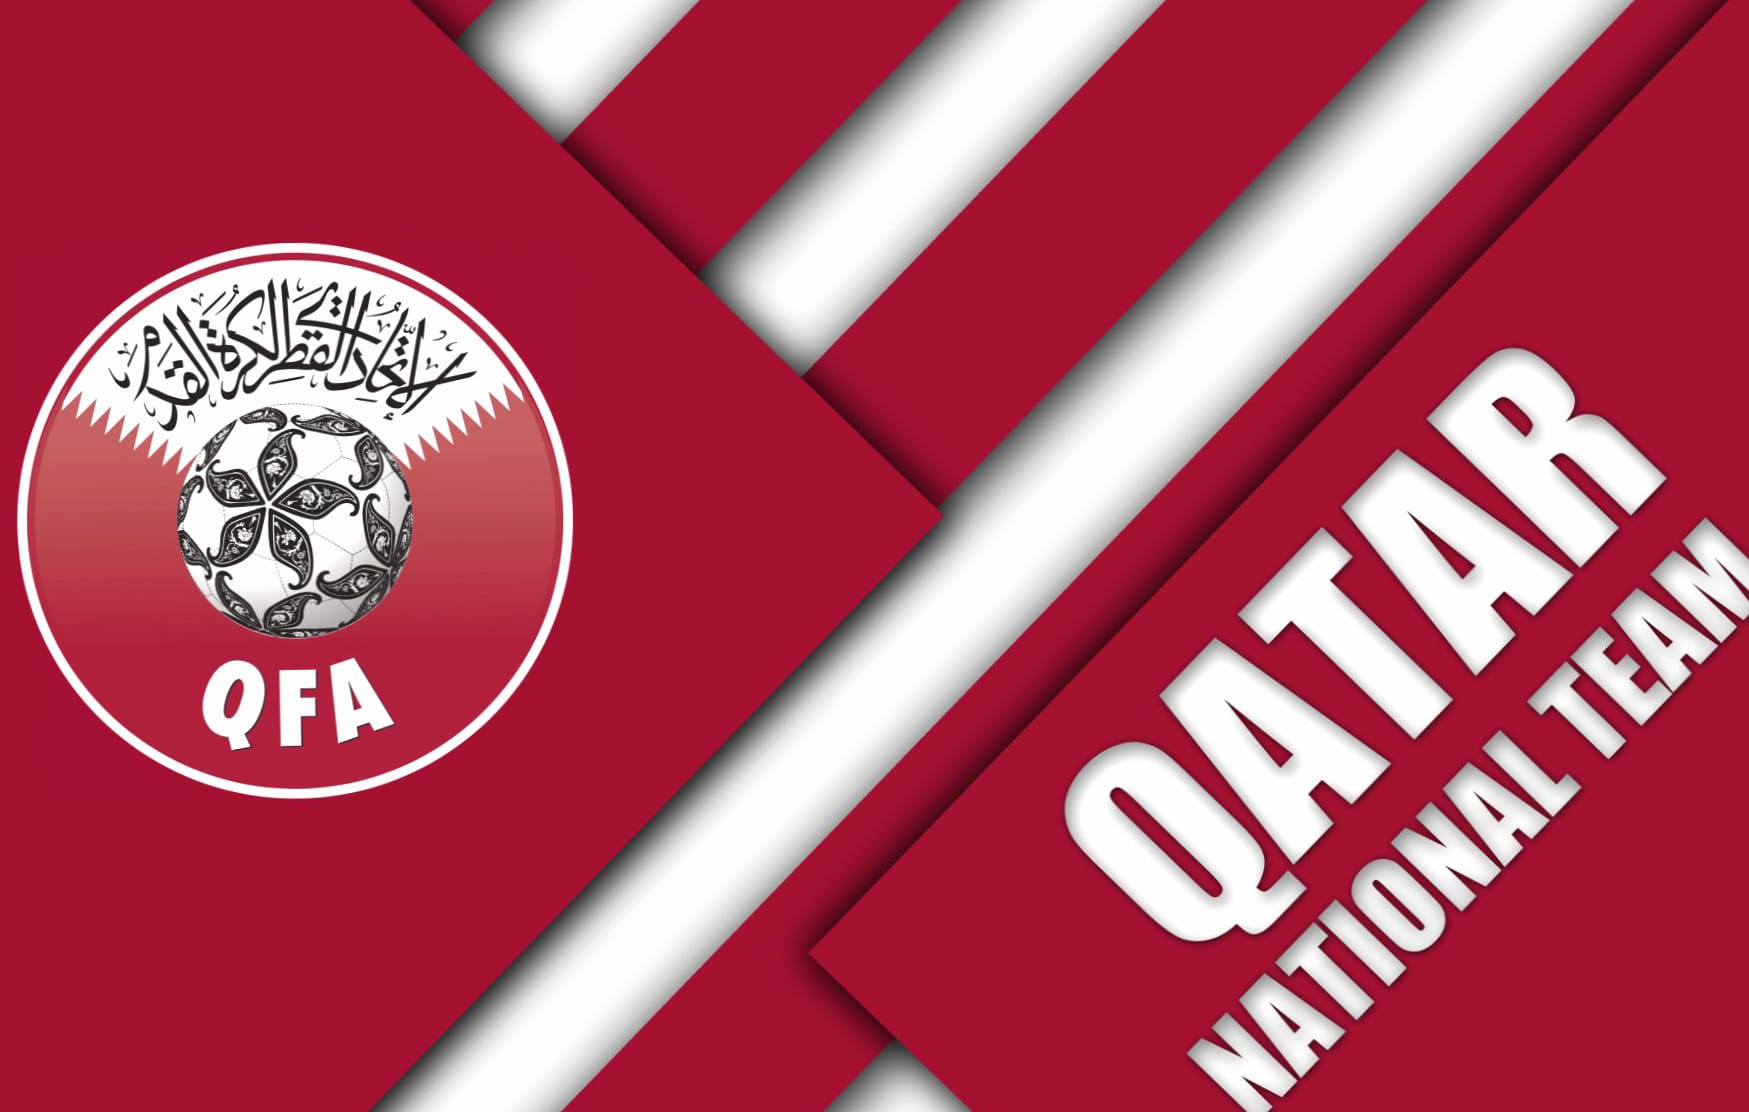 Qatar National Football Team at 1024 x 1024 iPad size wallpapers HD quality